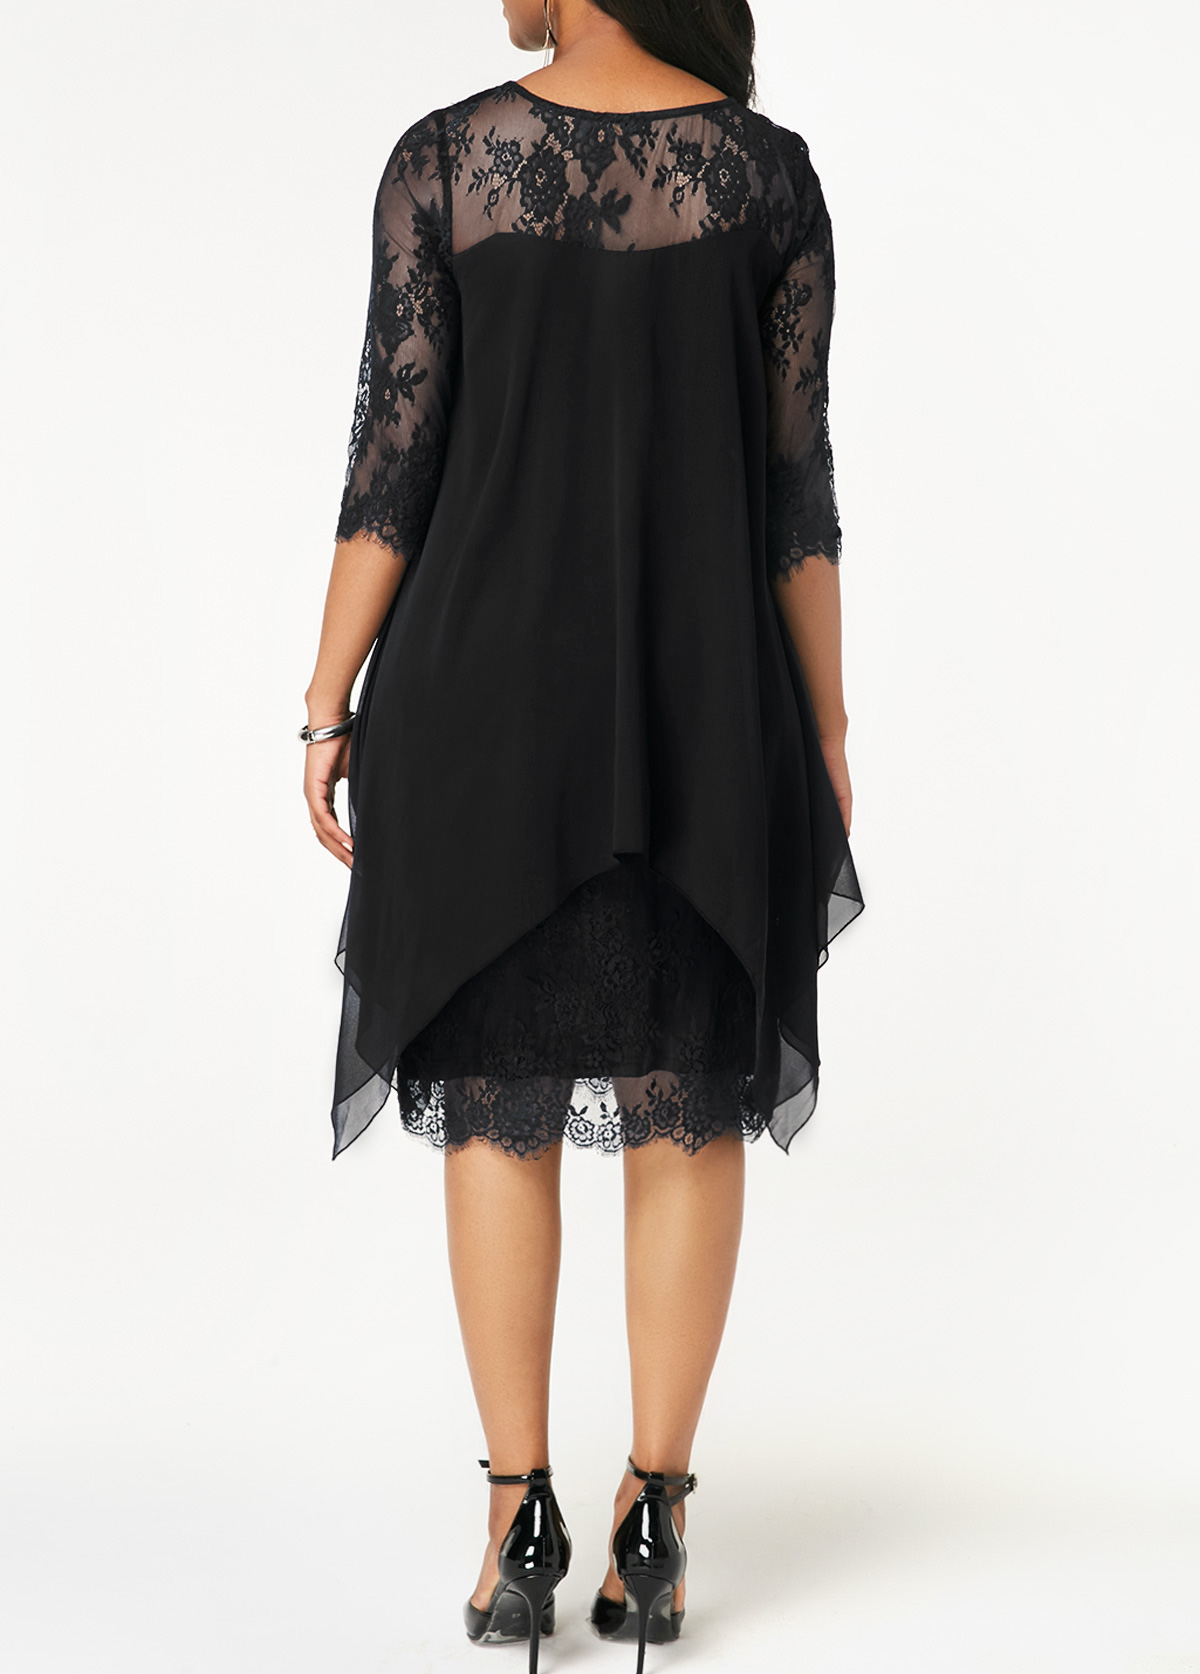 ROTITA Three Quarter Sleeve Chiffon Overlay Black Lace Dress | Rotita ...